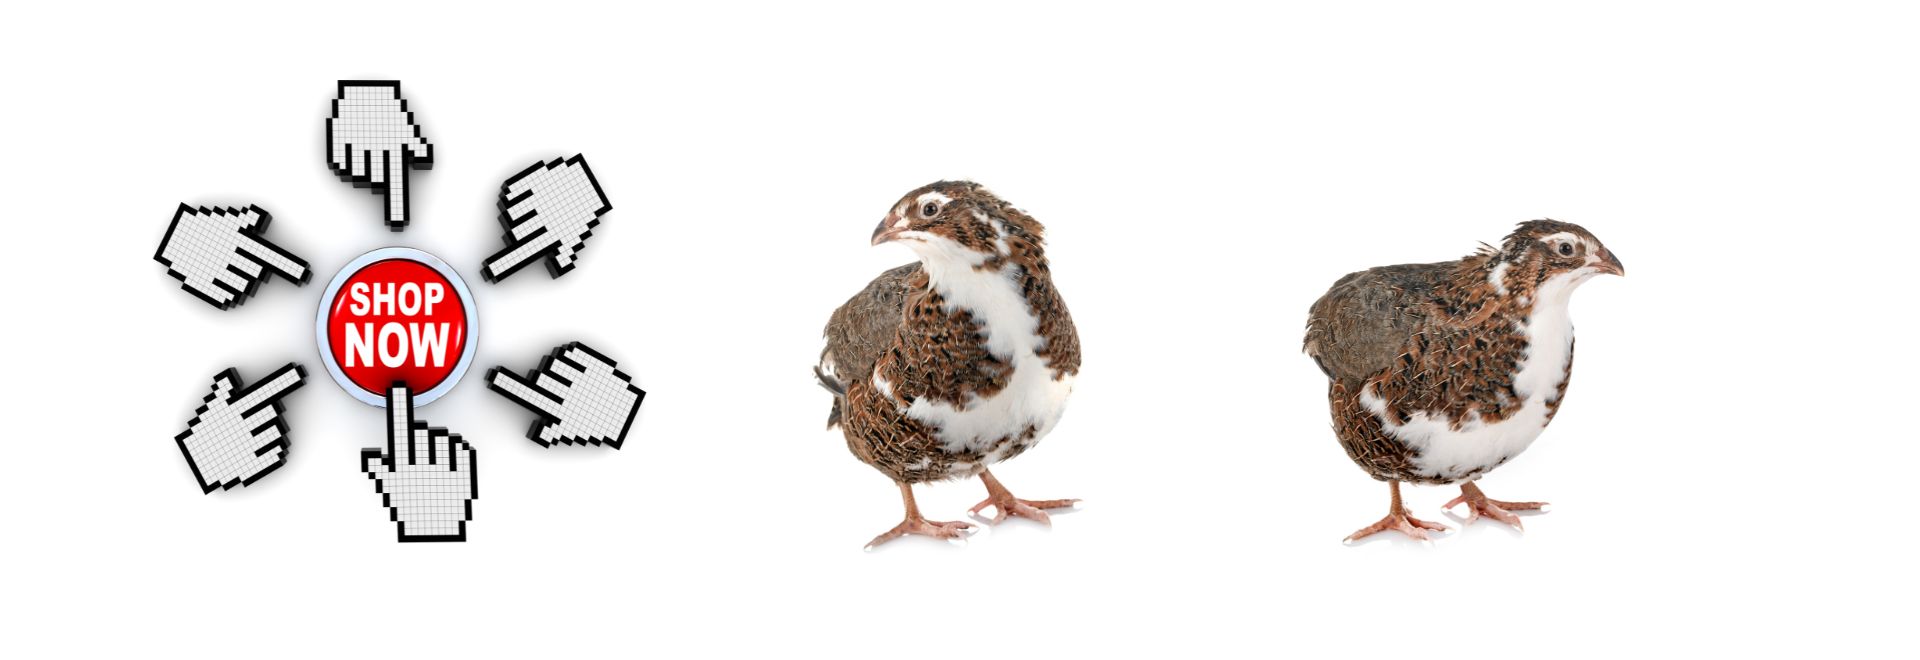 where to buy feeder quail